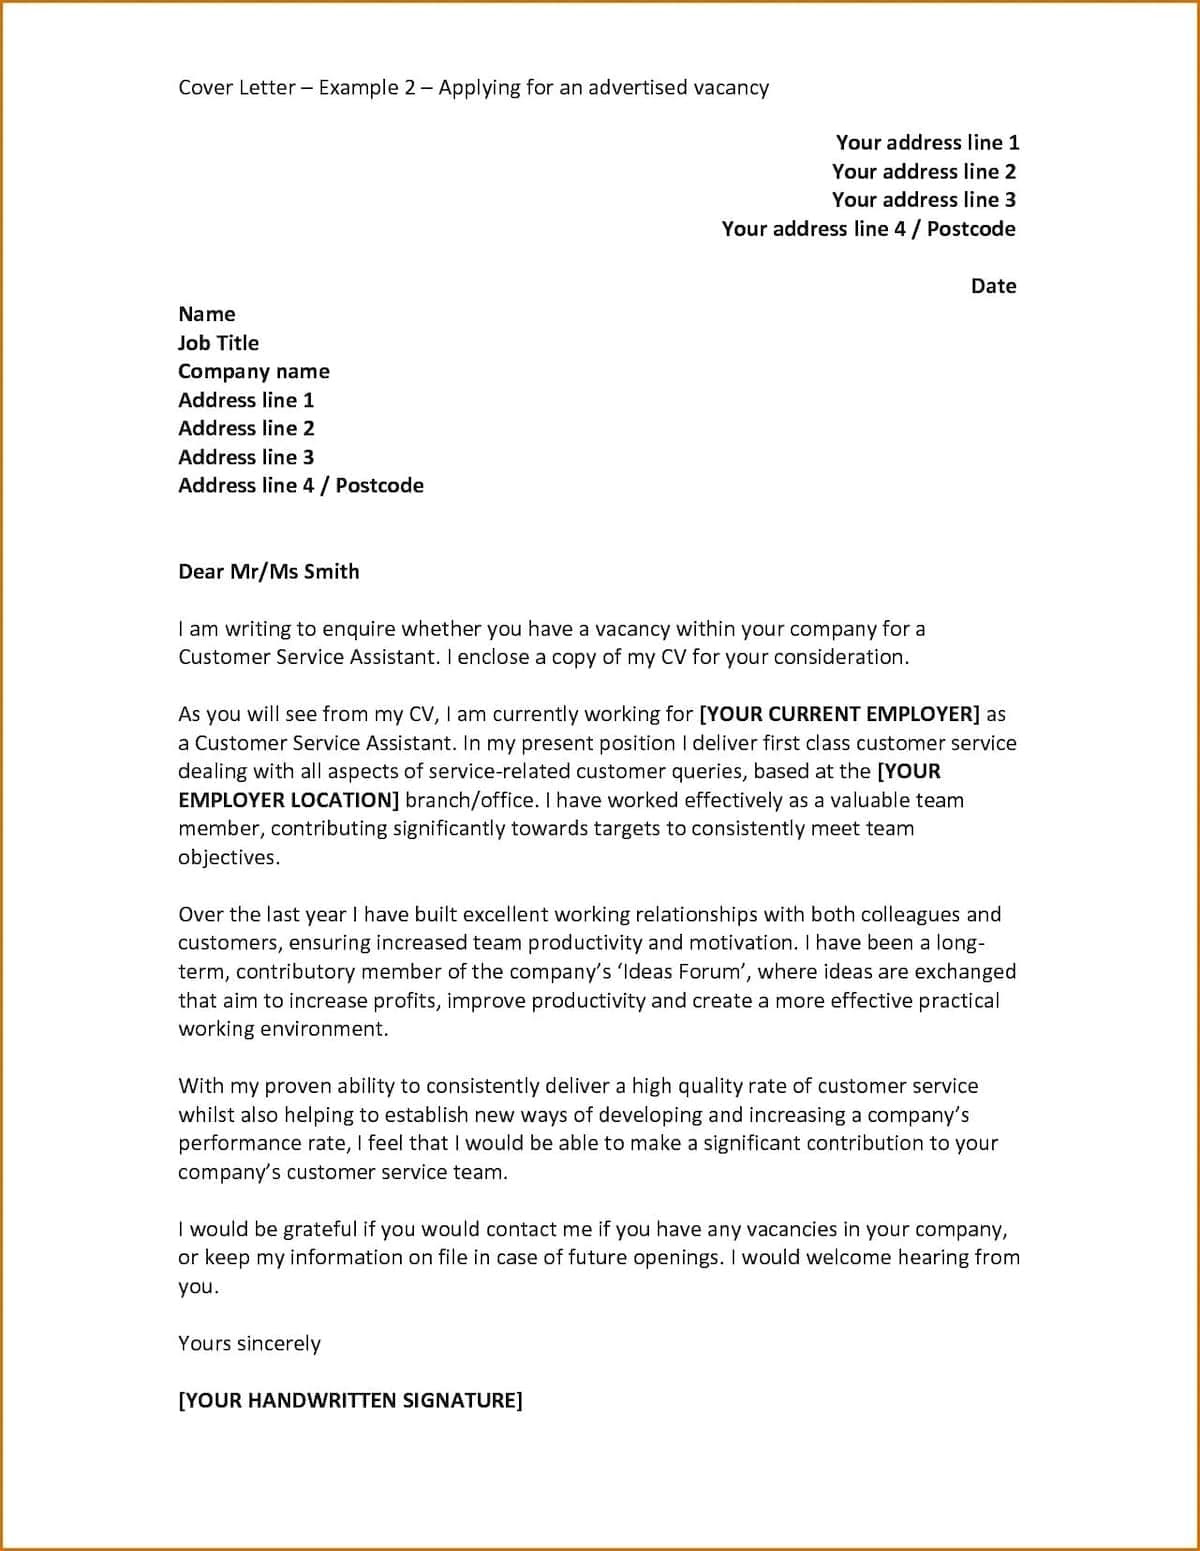 Jobs applications letter format